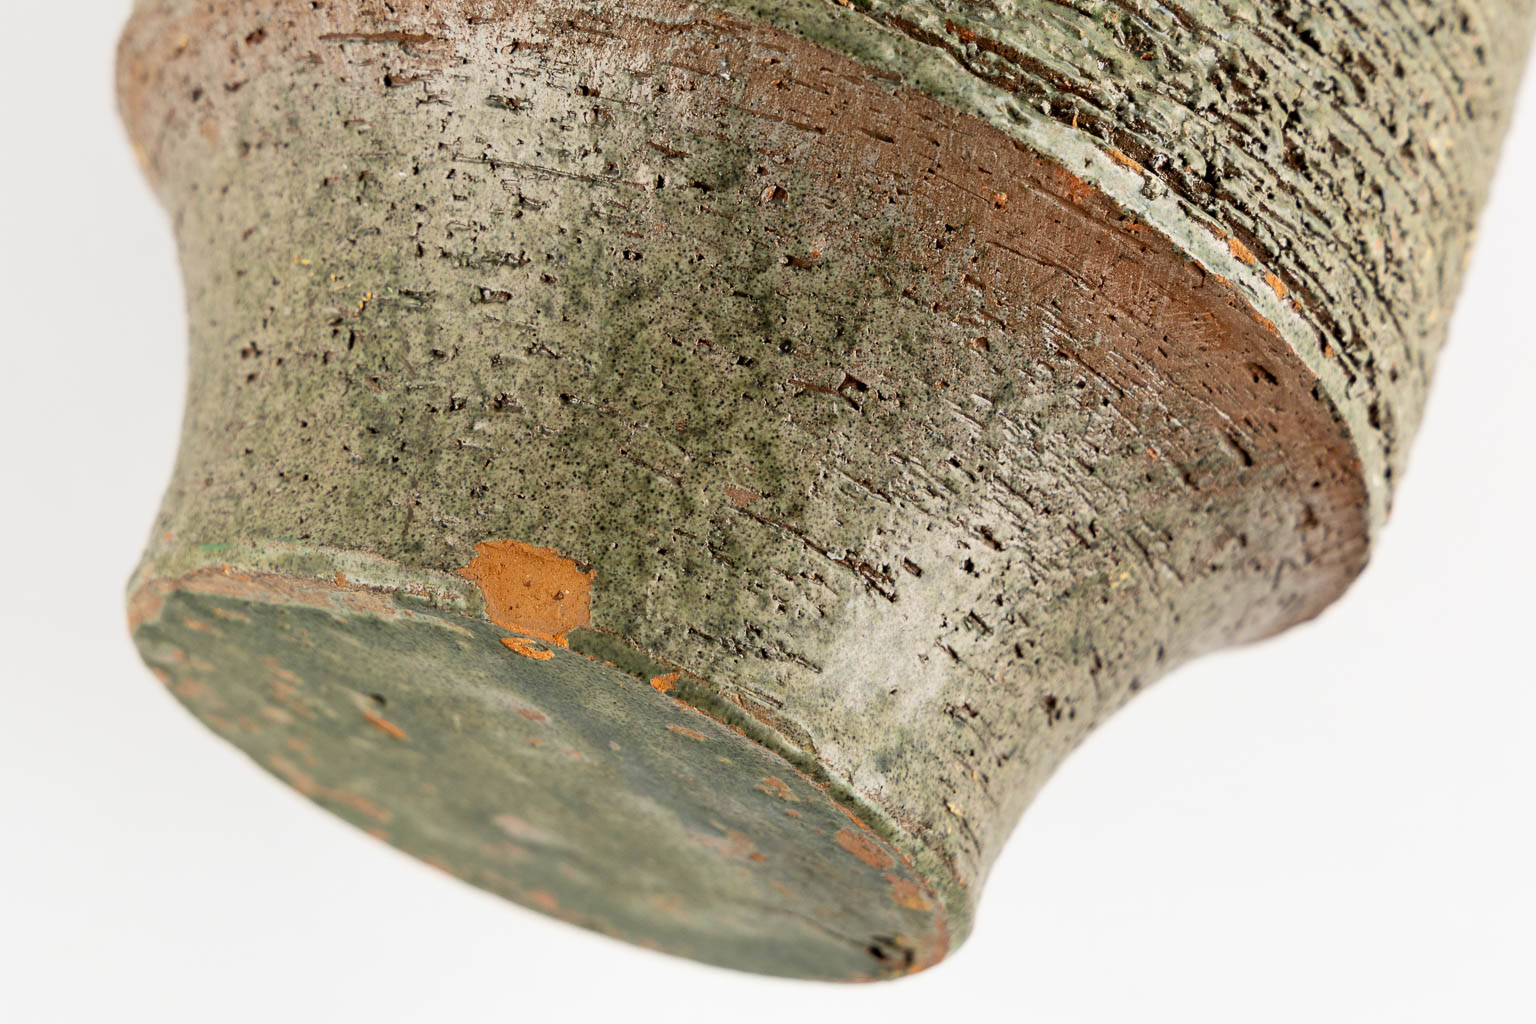 Amphora of Keramar, een grote groene vaas, geglazuurde keramiek. (H:53 x D:14 cm)